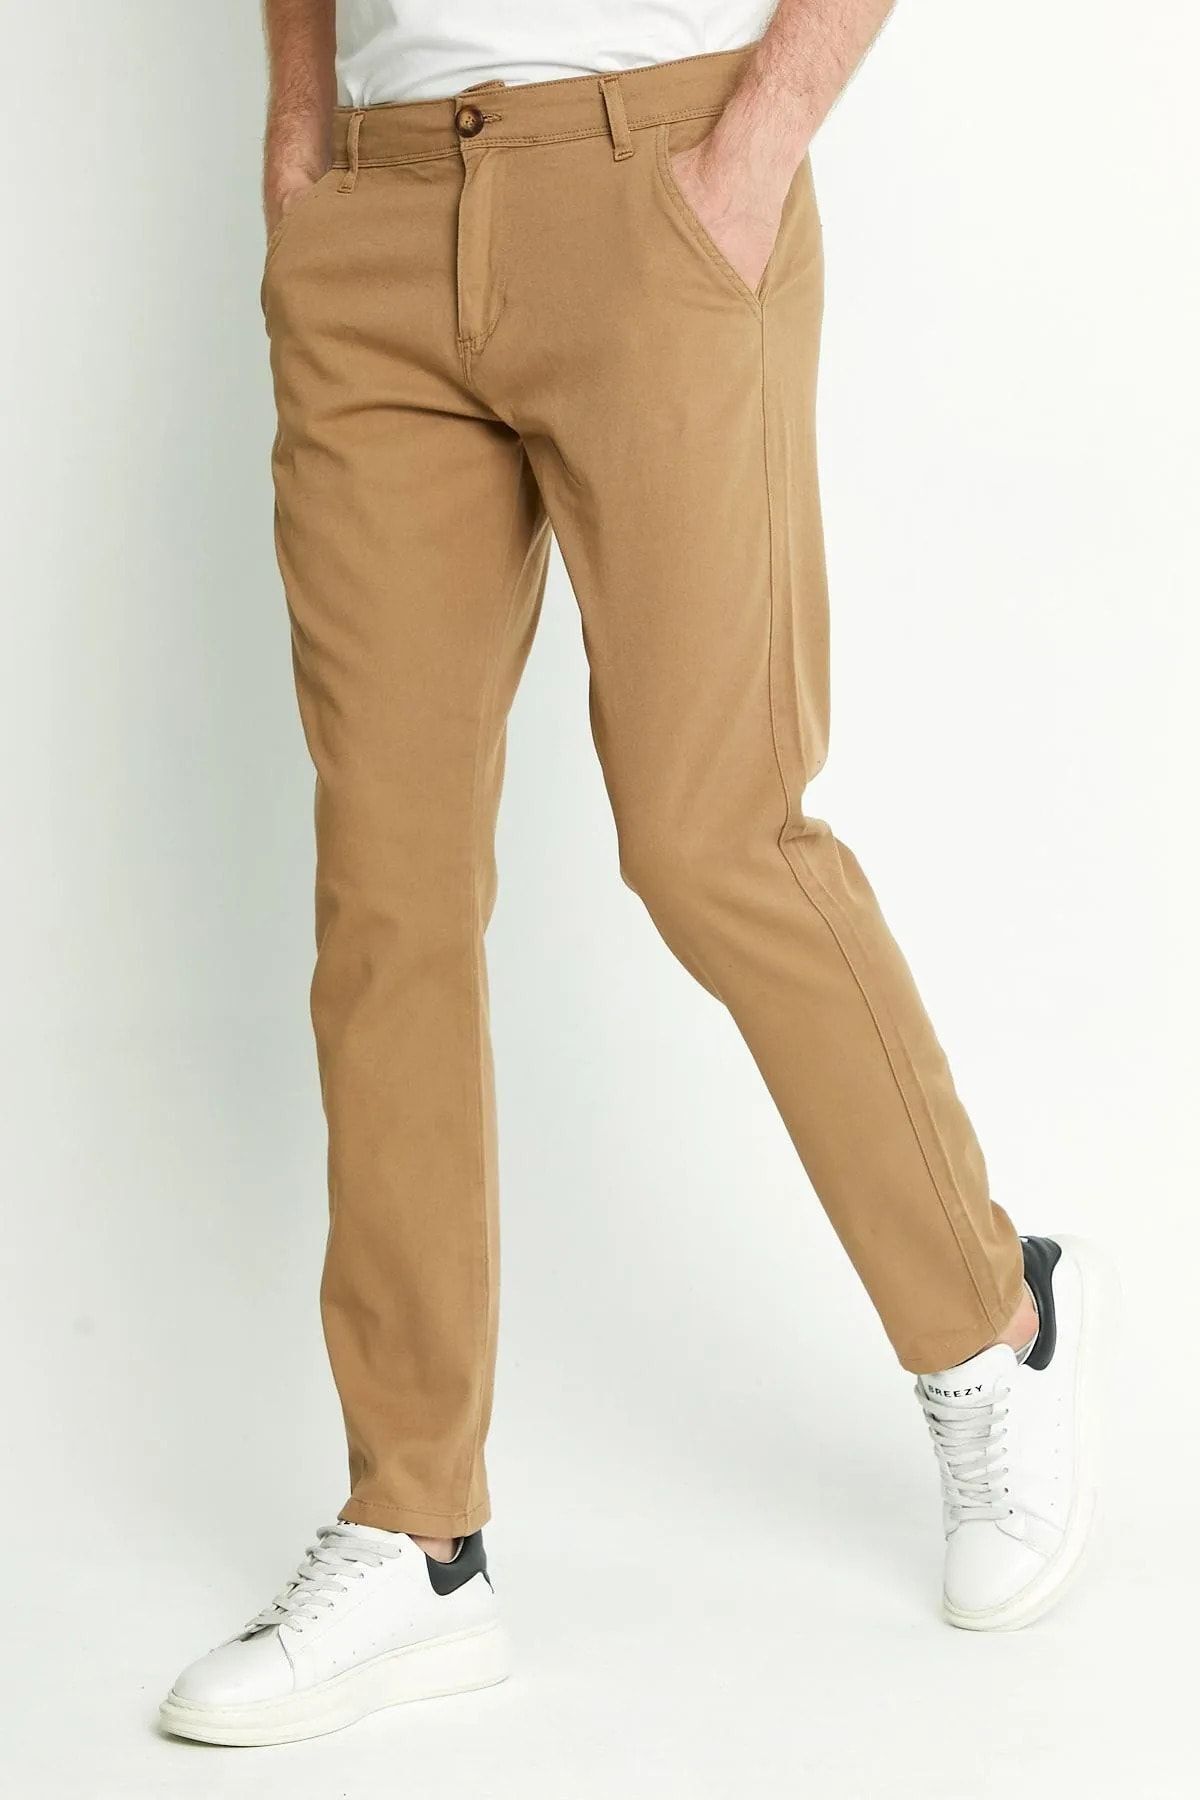 DAMGA JEANS Erkek Rahat Klasik Kesim Günlük Modern Şık Chino Pantolon